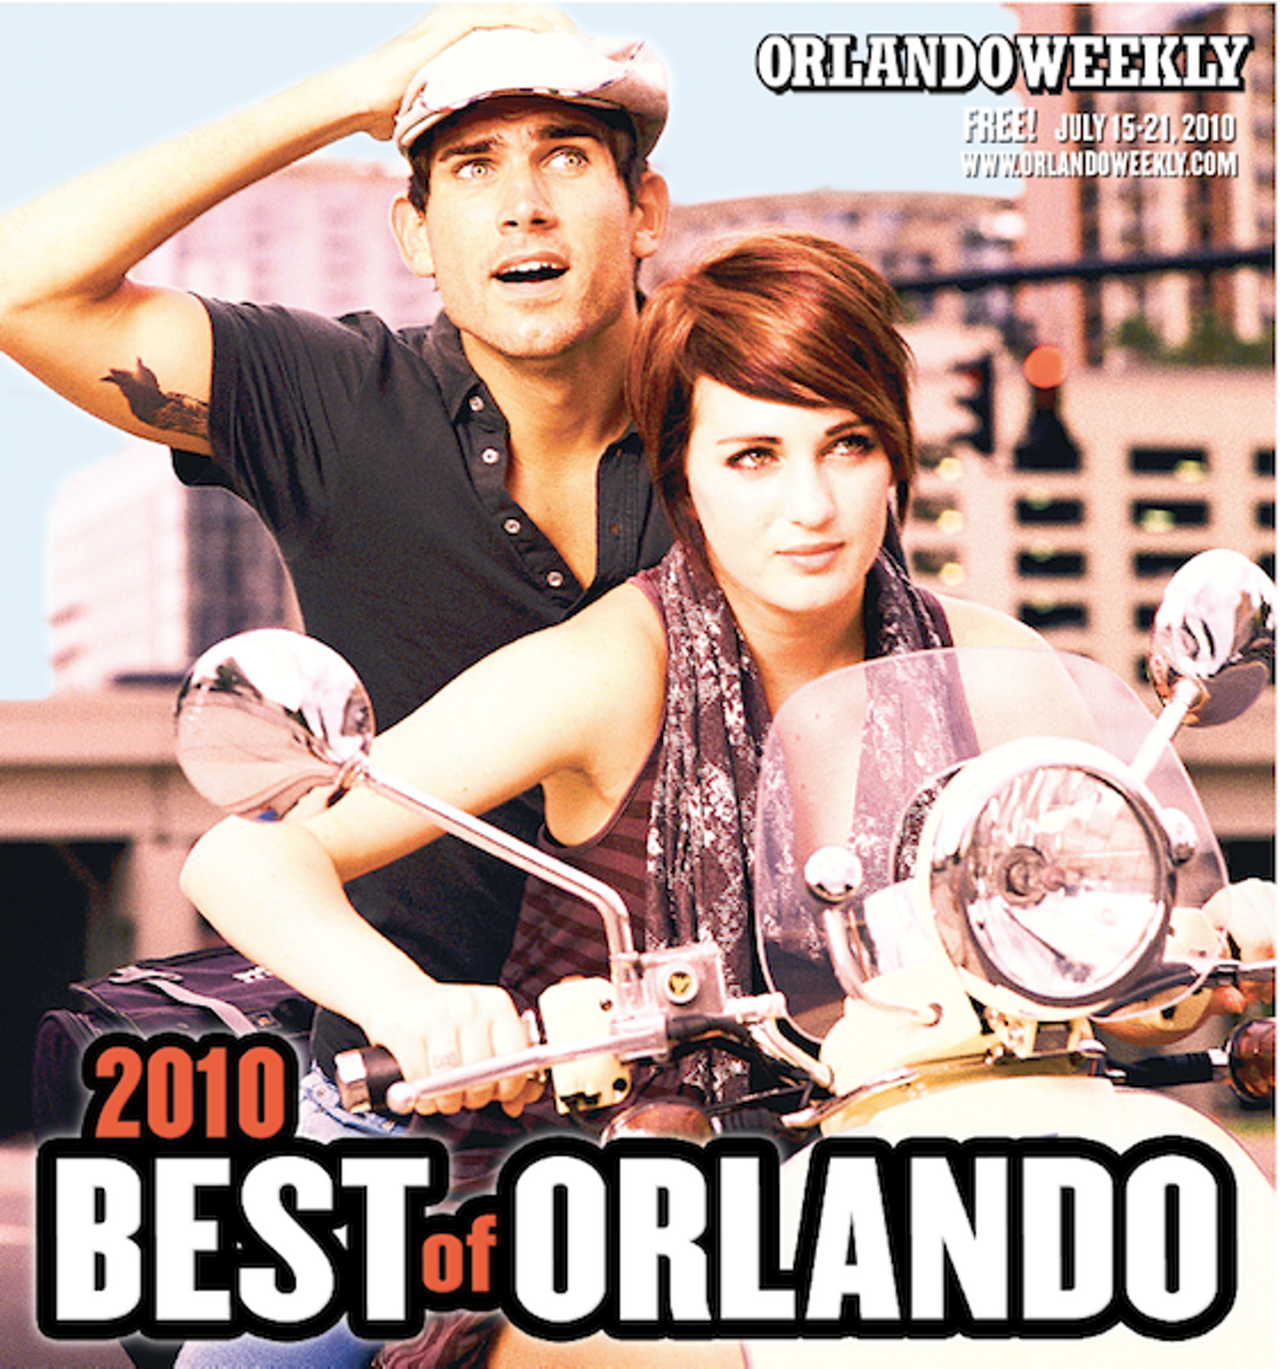 Orlando Weekly Best of Orlando 2010